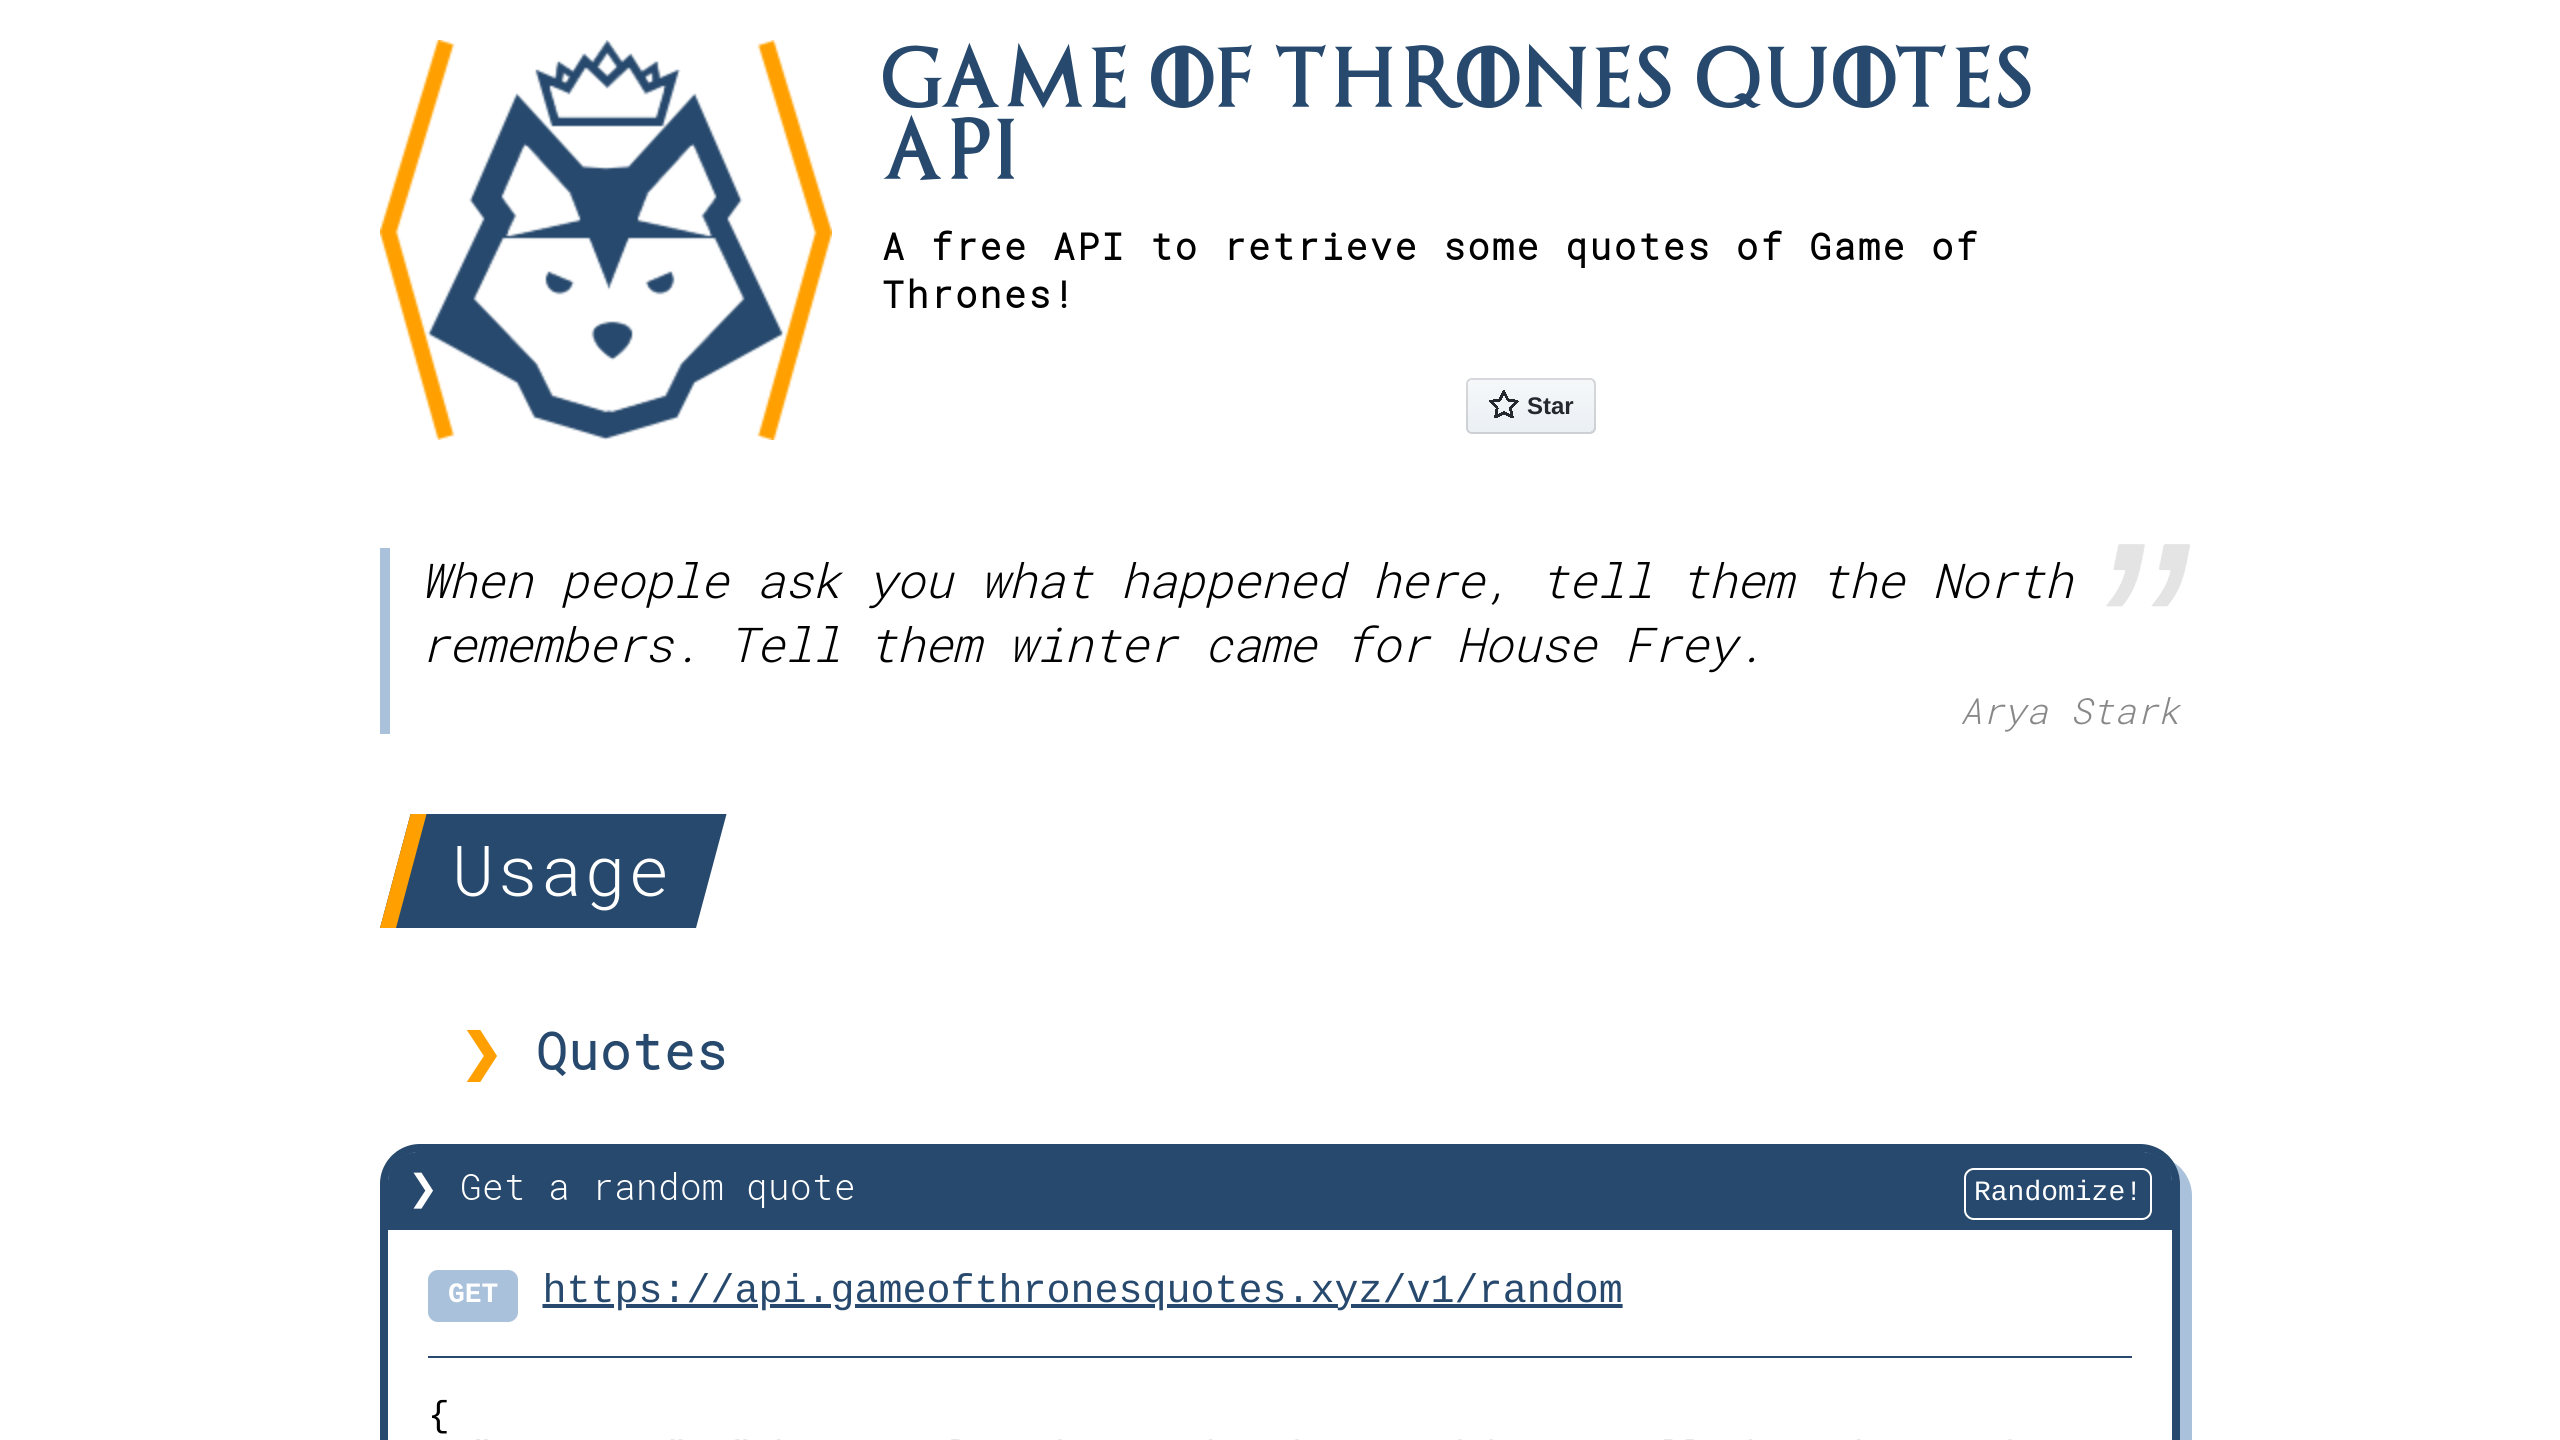 Game of Thrones Quotes's website screenshot